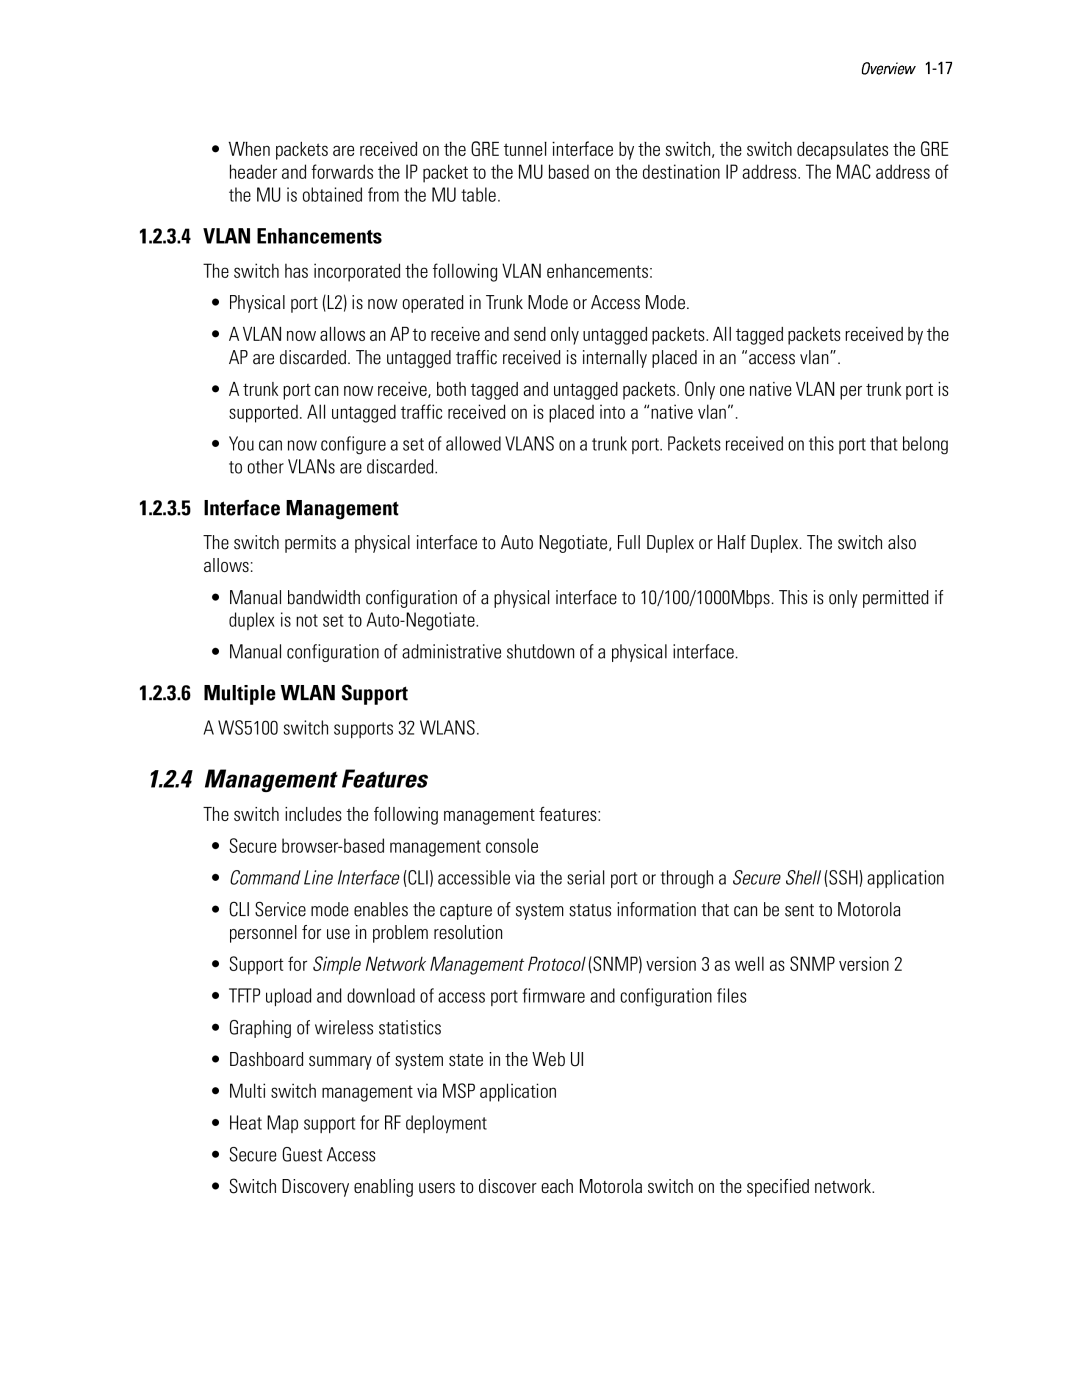 Motorola WS5100 Management Features, 1.2.3.4VLAN Enhancements, 1.2.3.5Interface Management, 1.2.3.6Multiple WLAN Support 